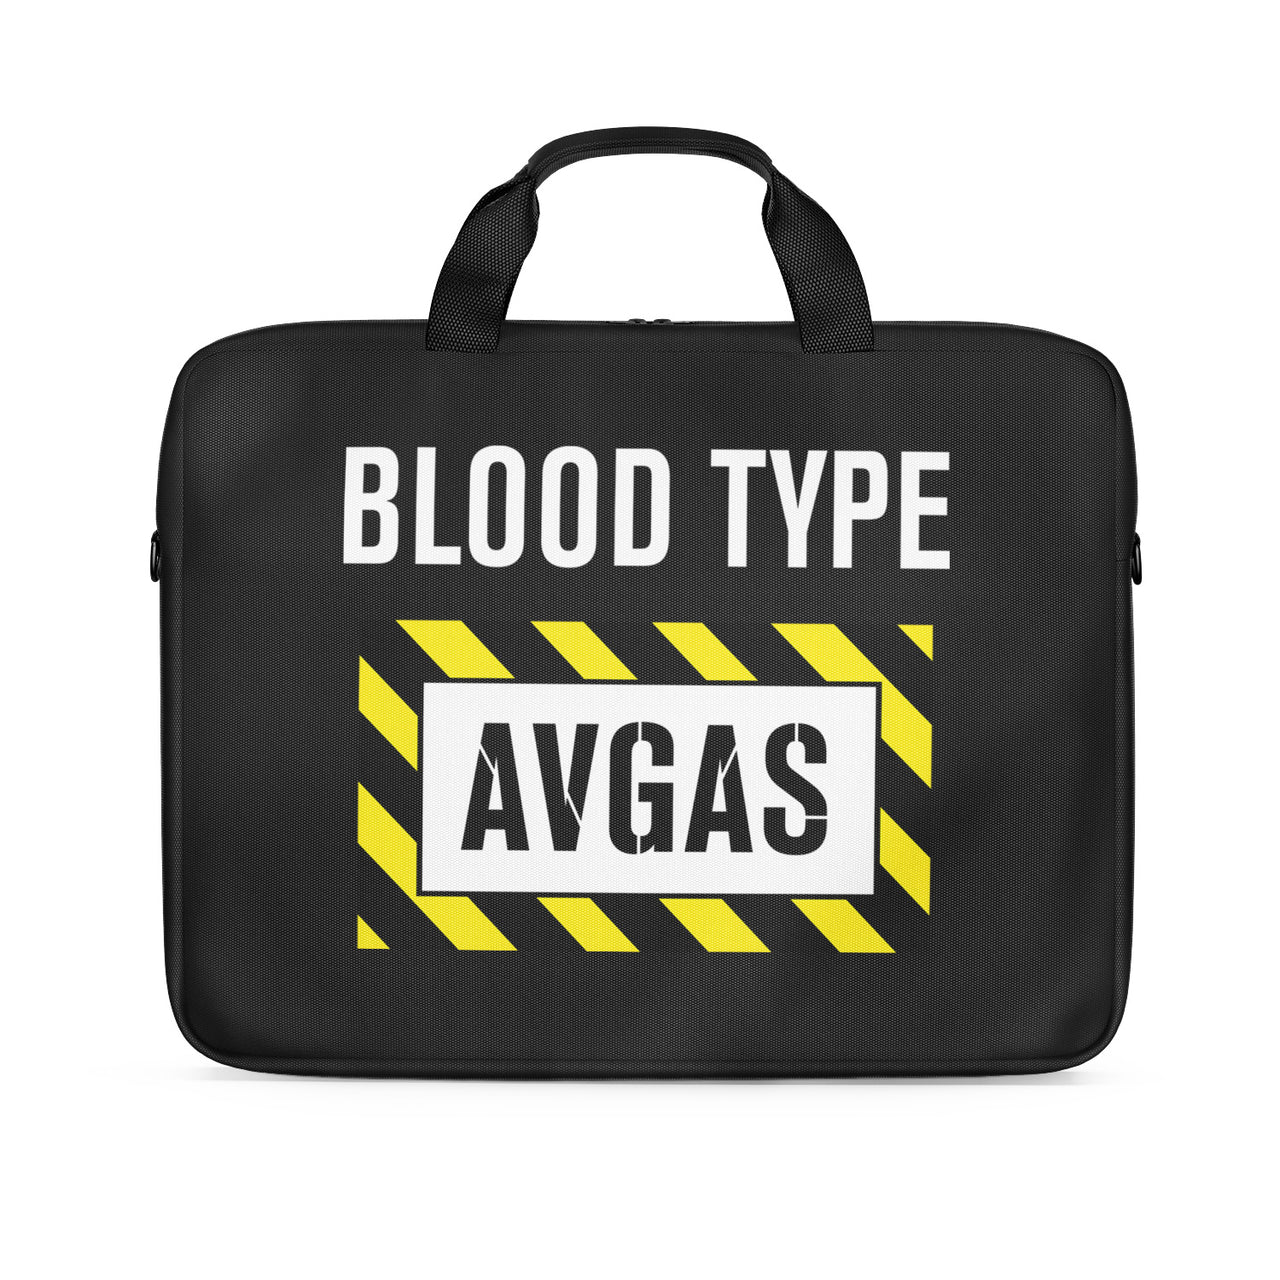 Blood Type AVGAS Designed Laptop & Tablet Bags